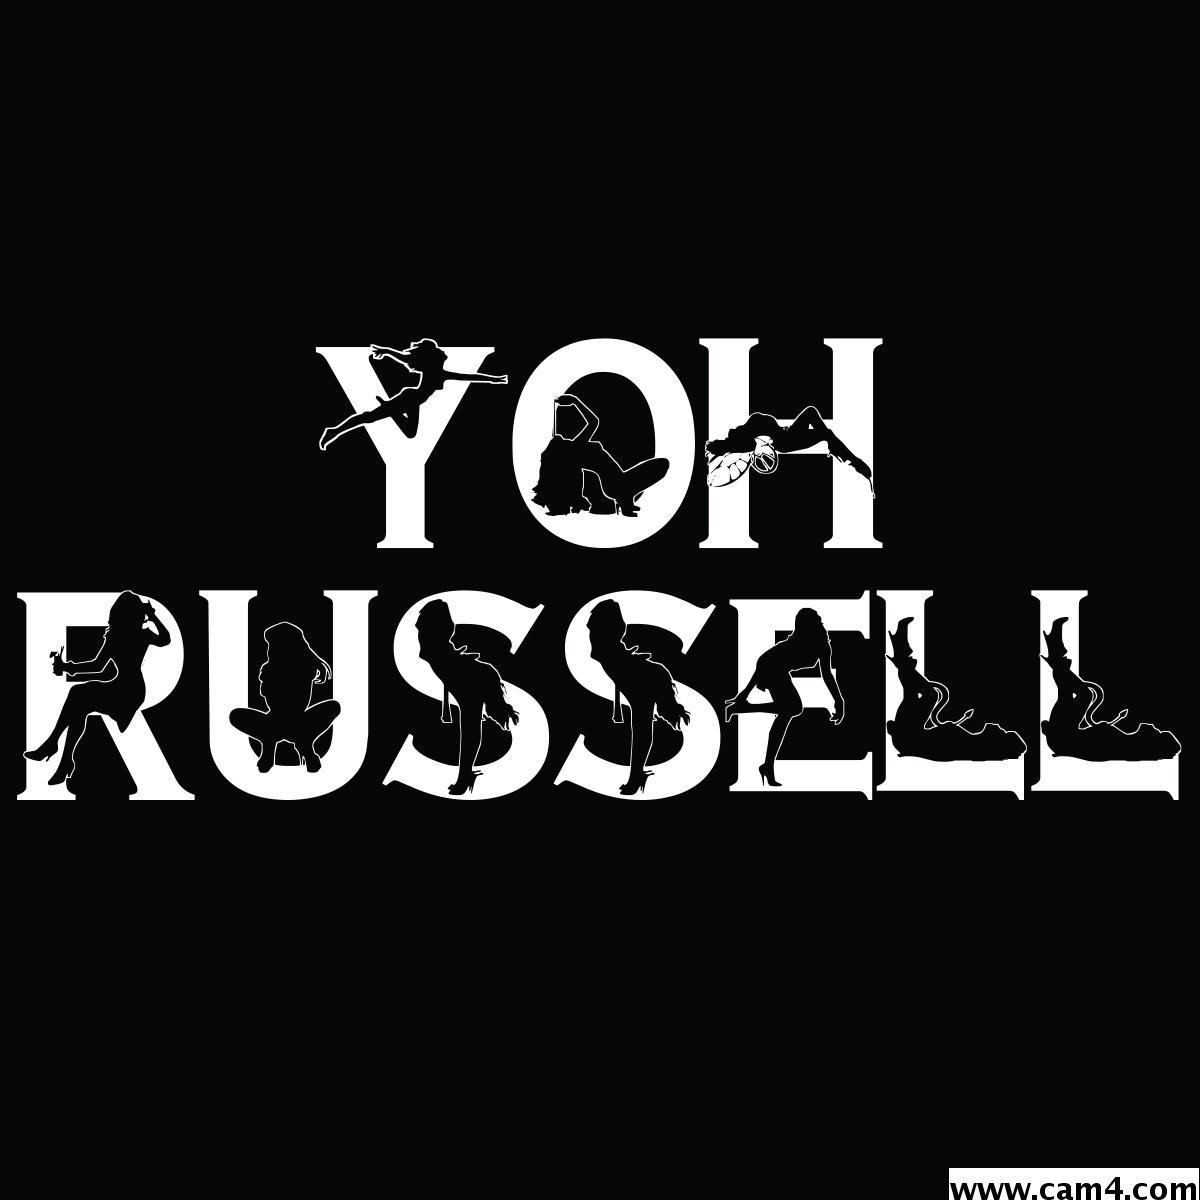 yohrussell